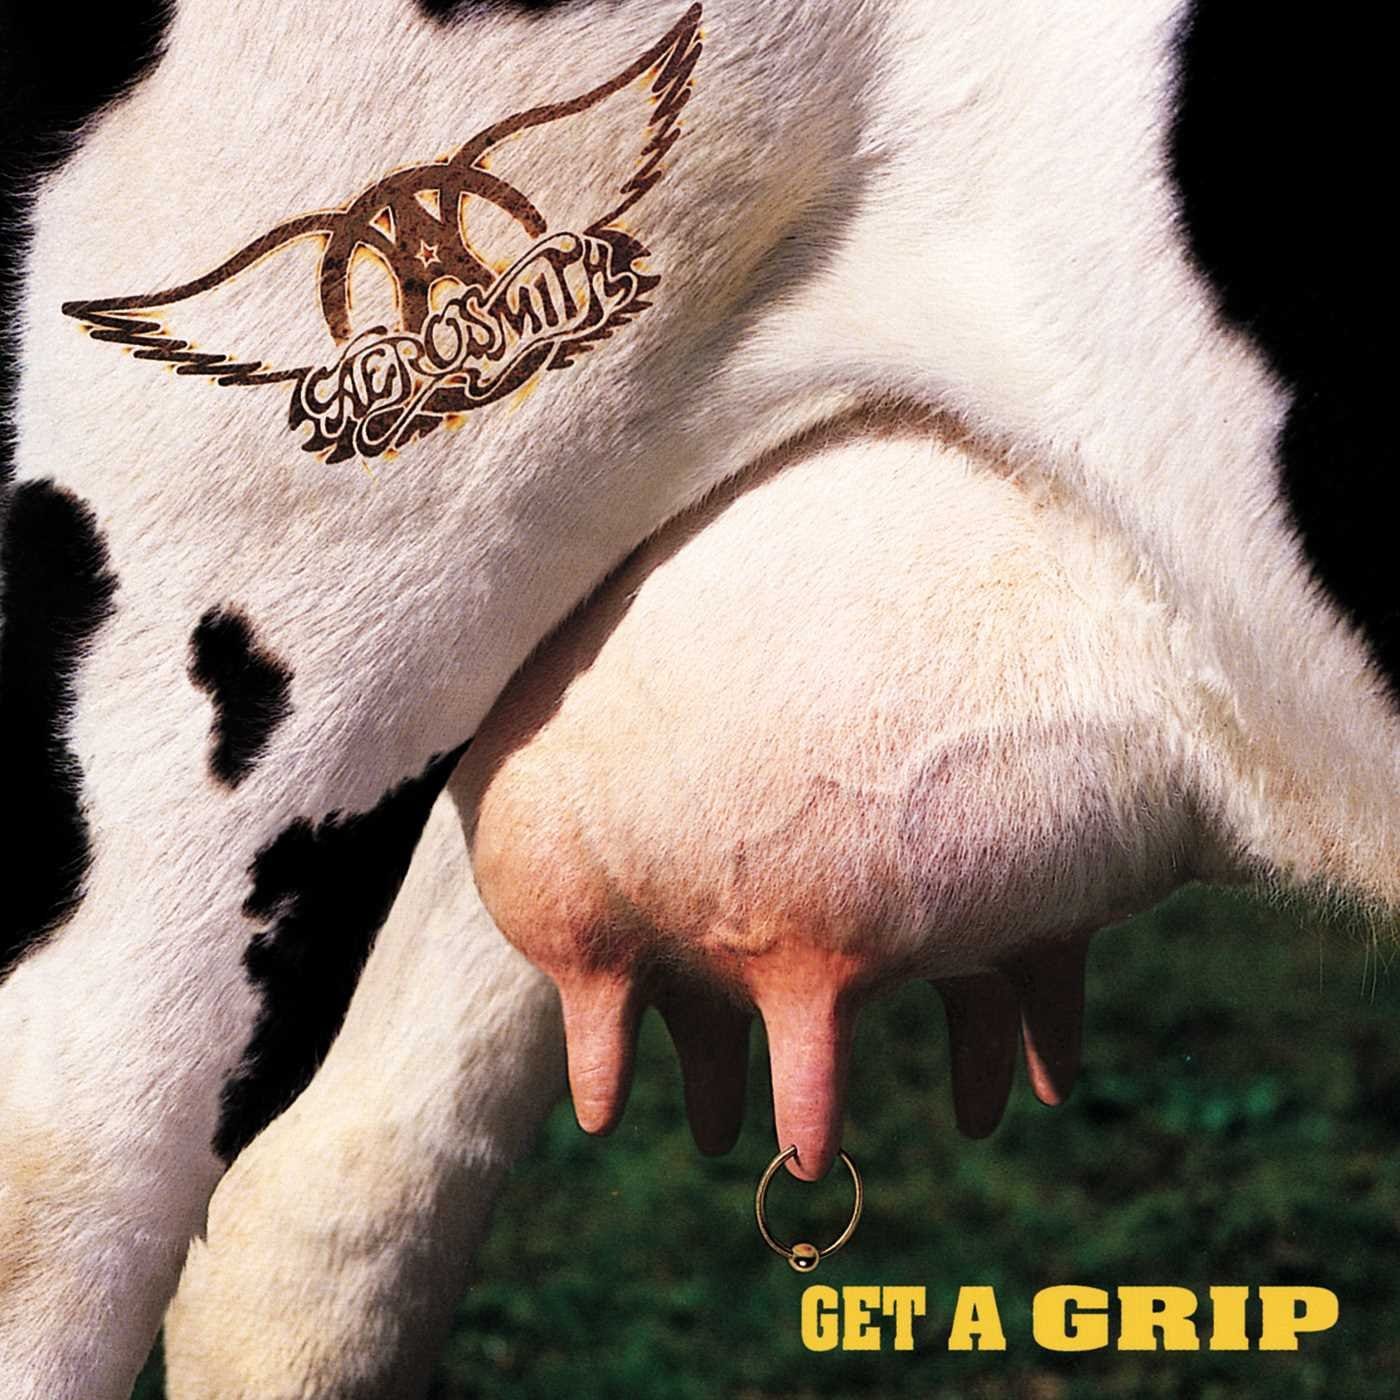 Aerosmith - Get A Grip [Remastered] - Amazon.com Music